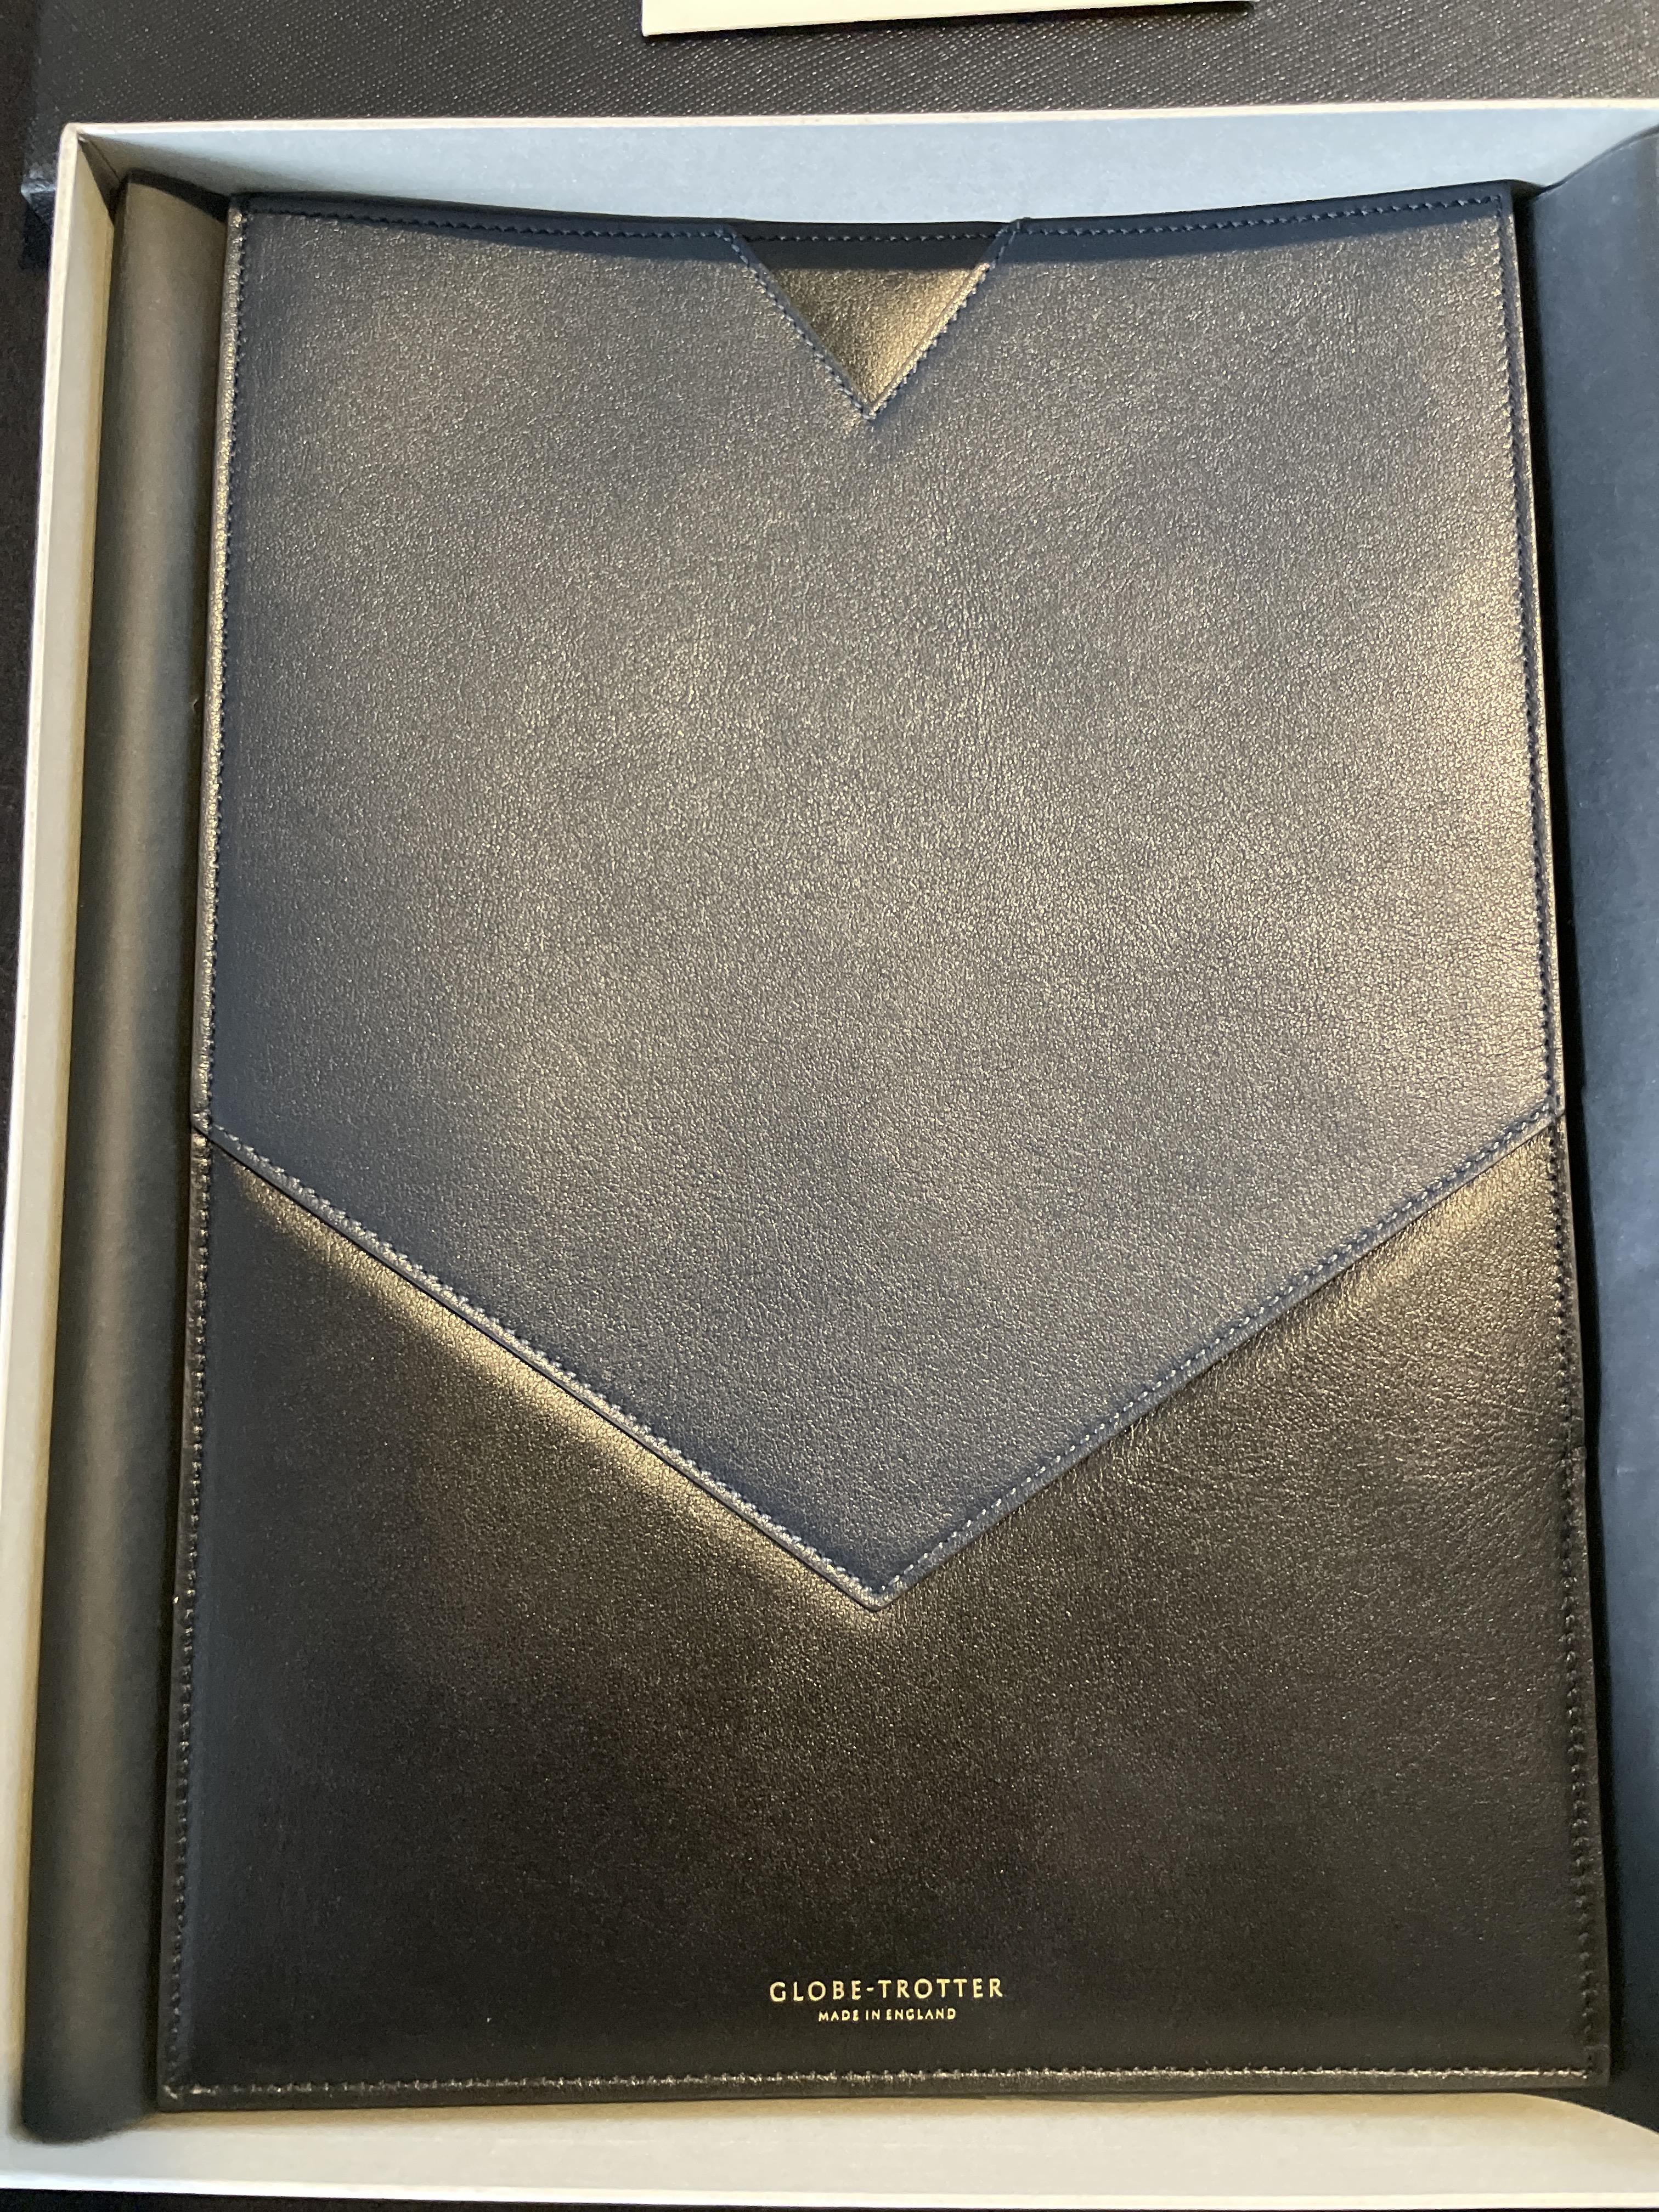 Globe Trotter 007 Money Penny Leather iPad Case - Image 4 of 6